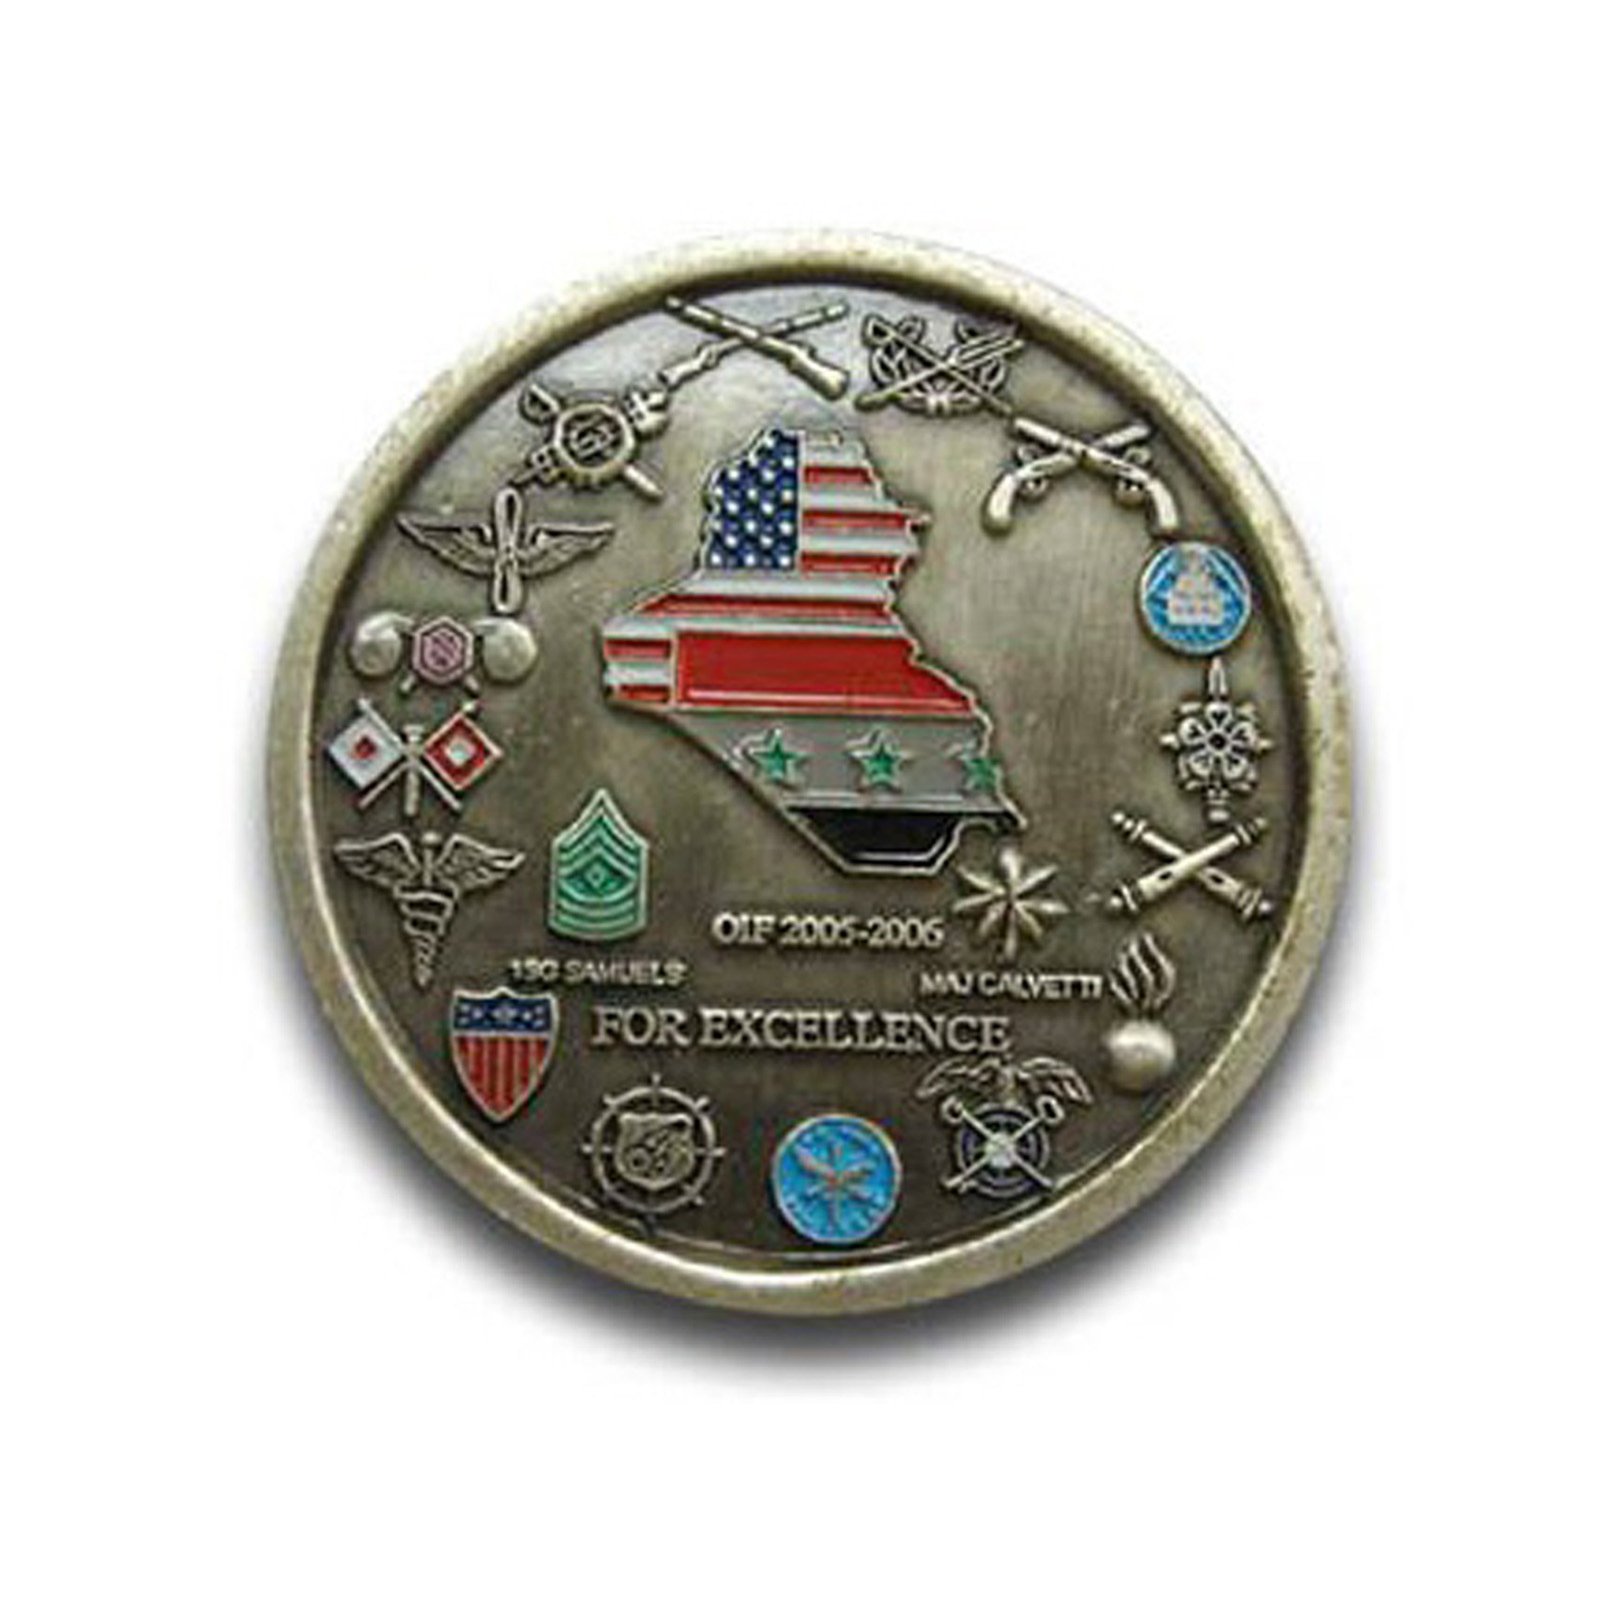 2013 Custom Coin (XY-JNB1028)